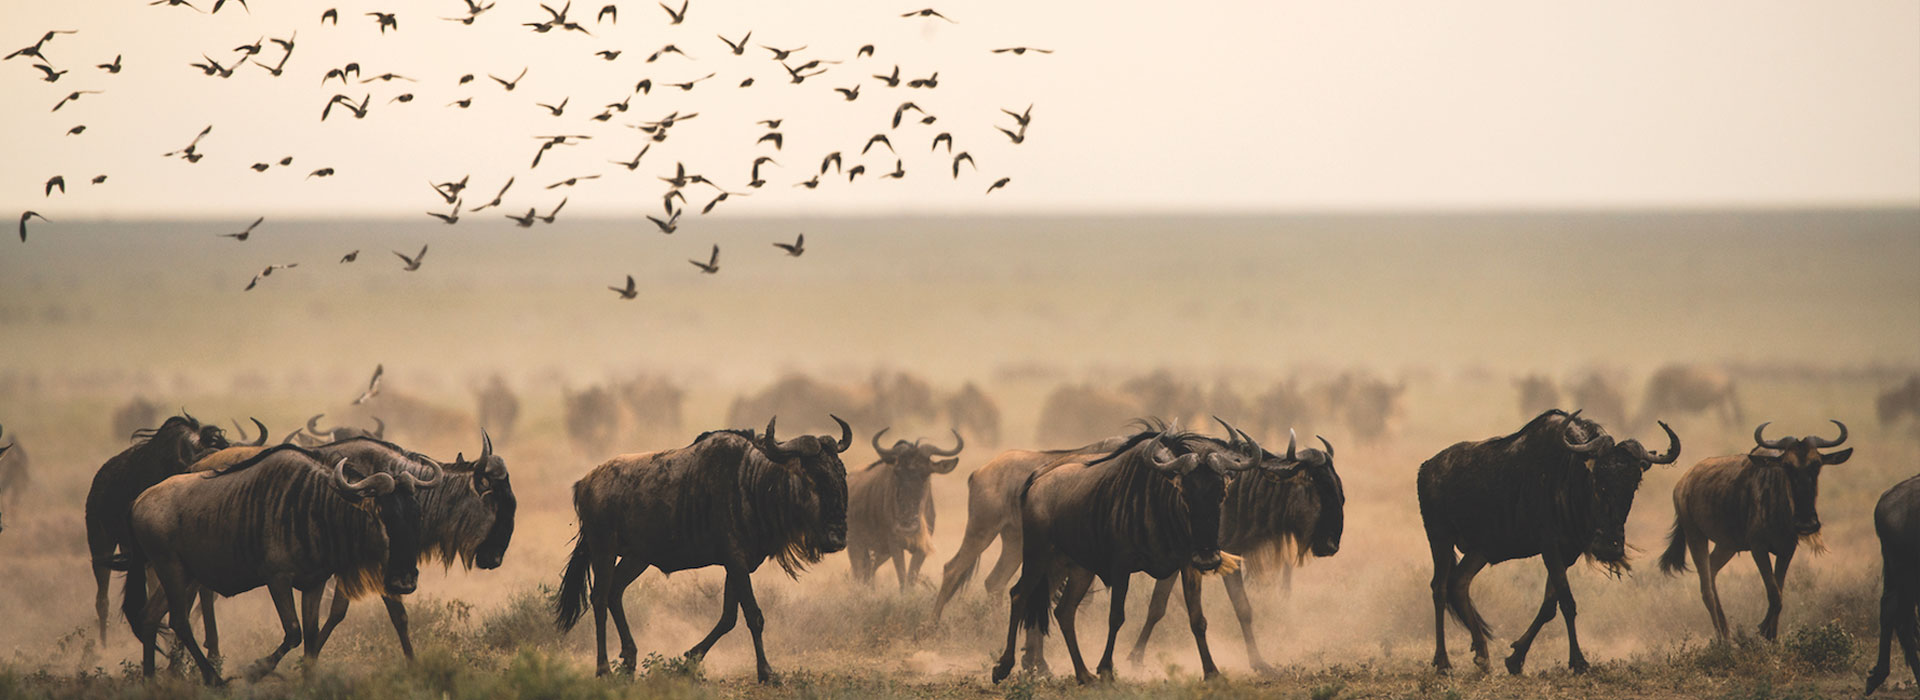 Great Wildebeest Migration Safari In Tanzania